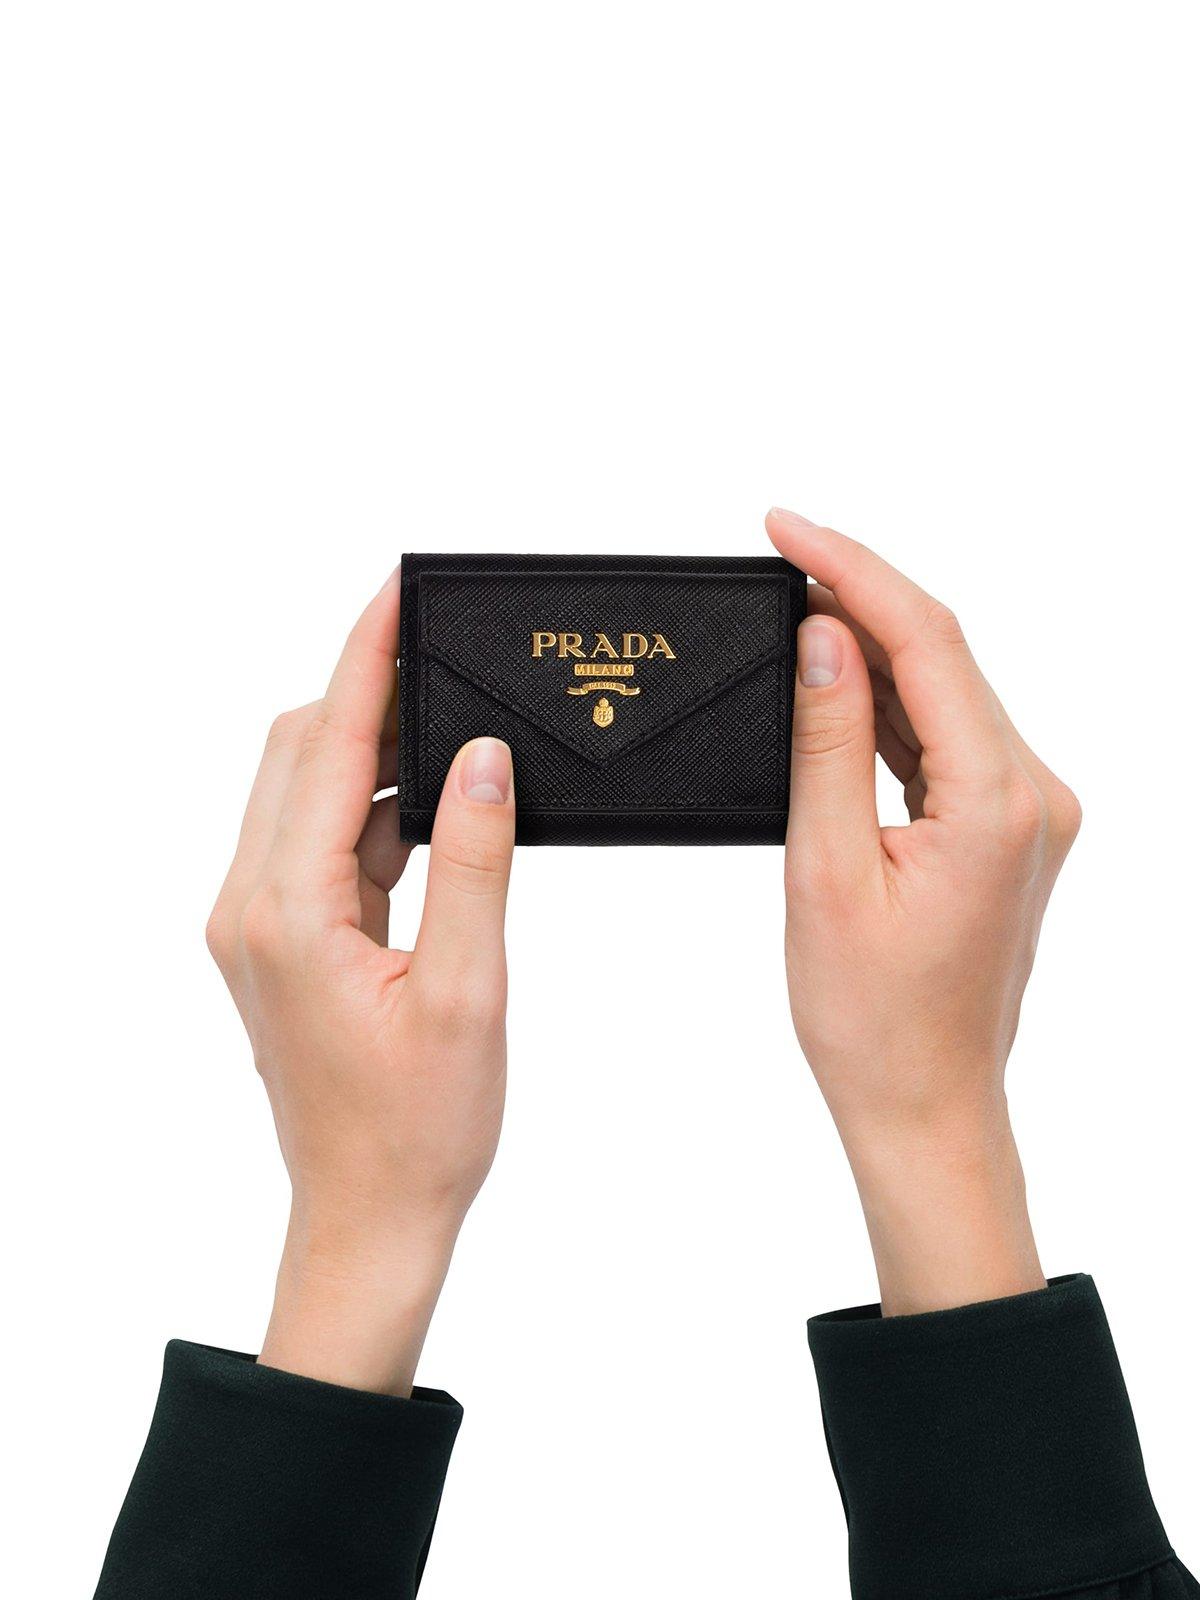 Prada Small Saffiano Leather Wallet in Black | Lyst